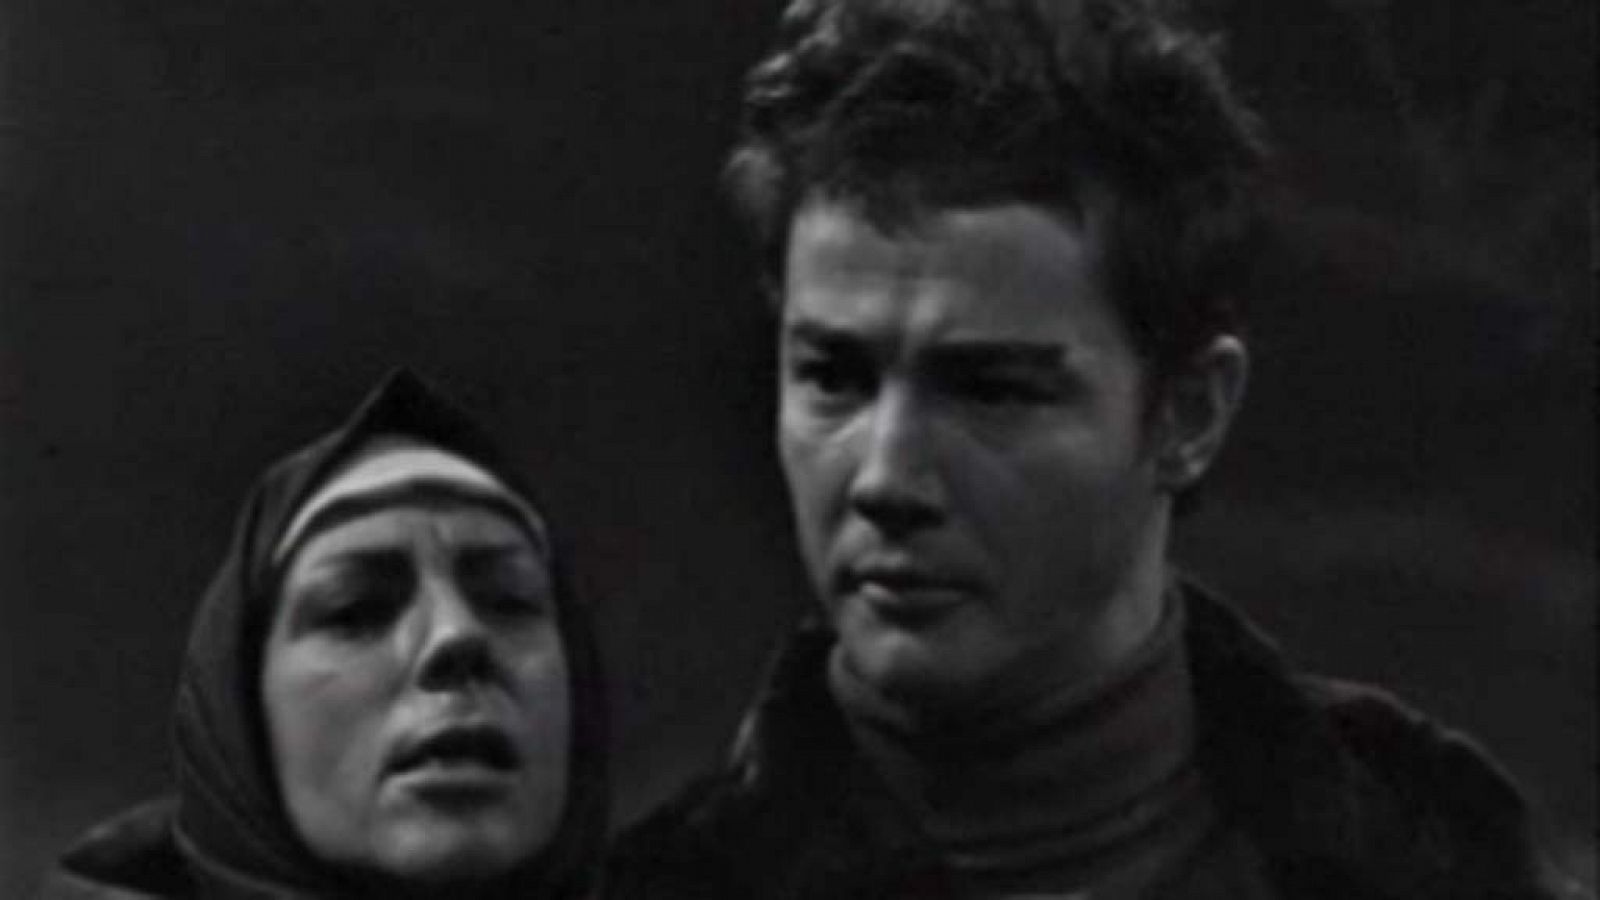 Teatro - La vida es sueño (auto sacramental) (1965)